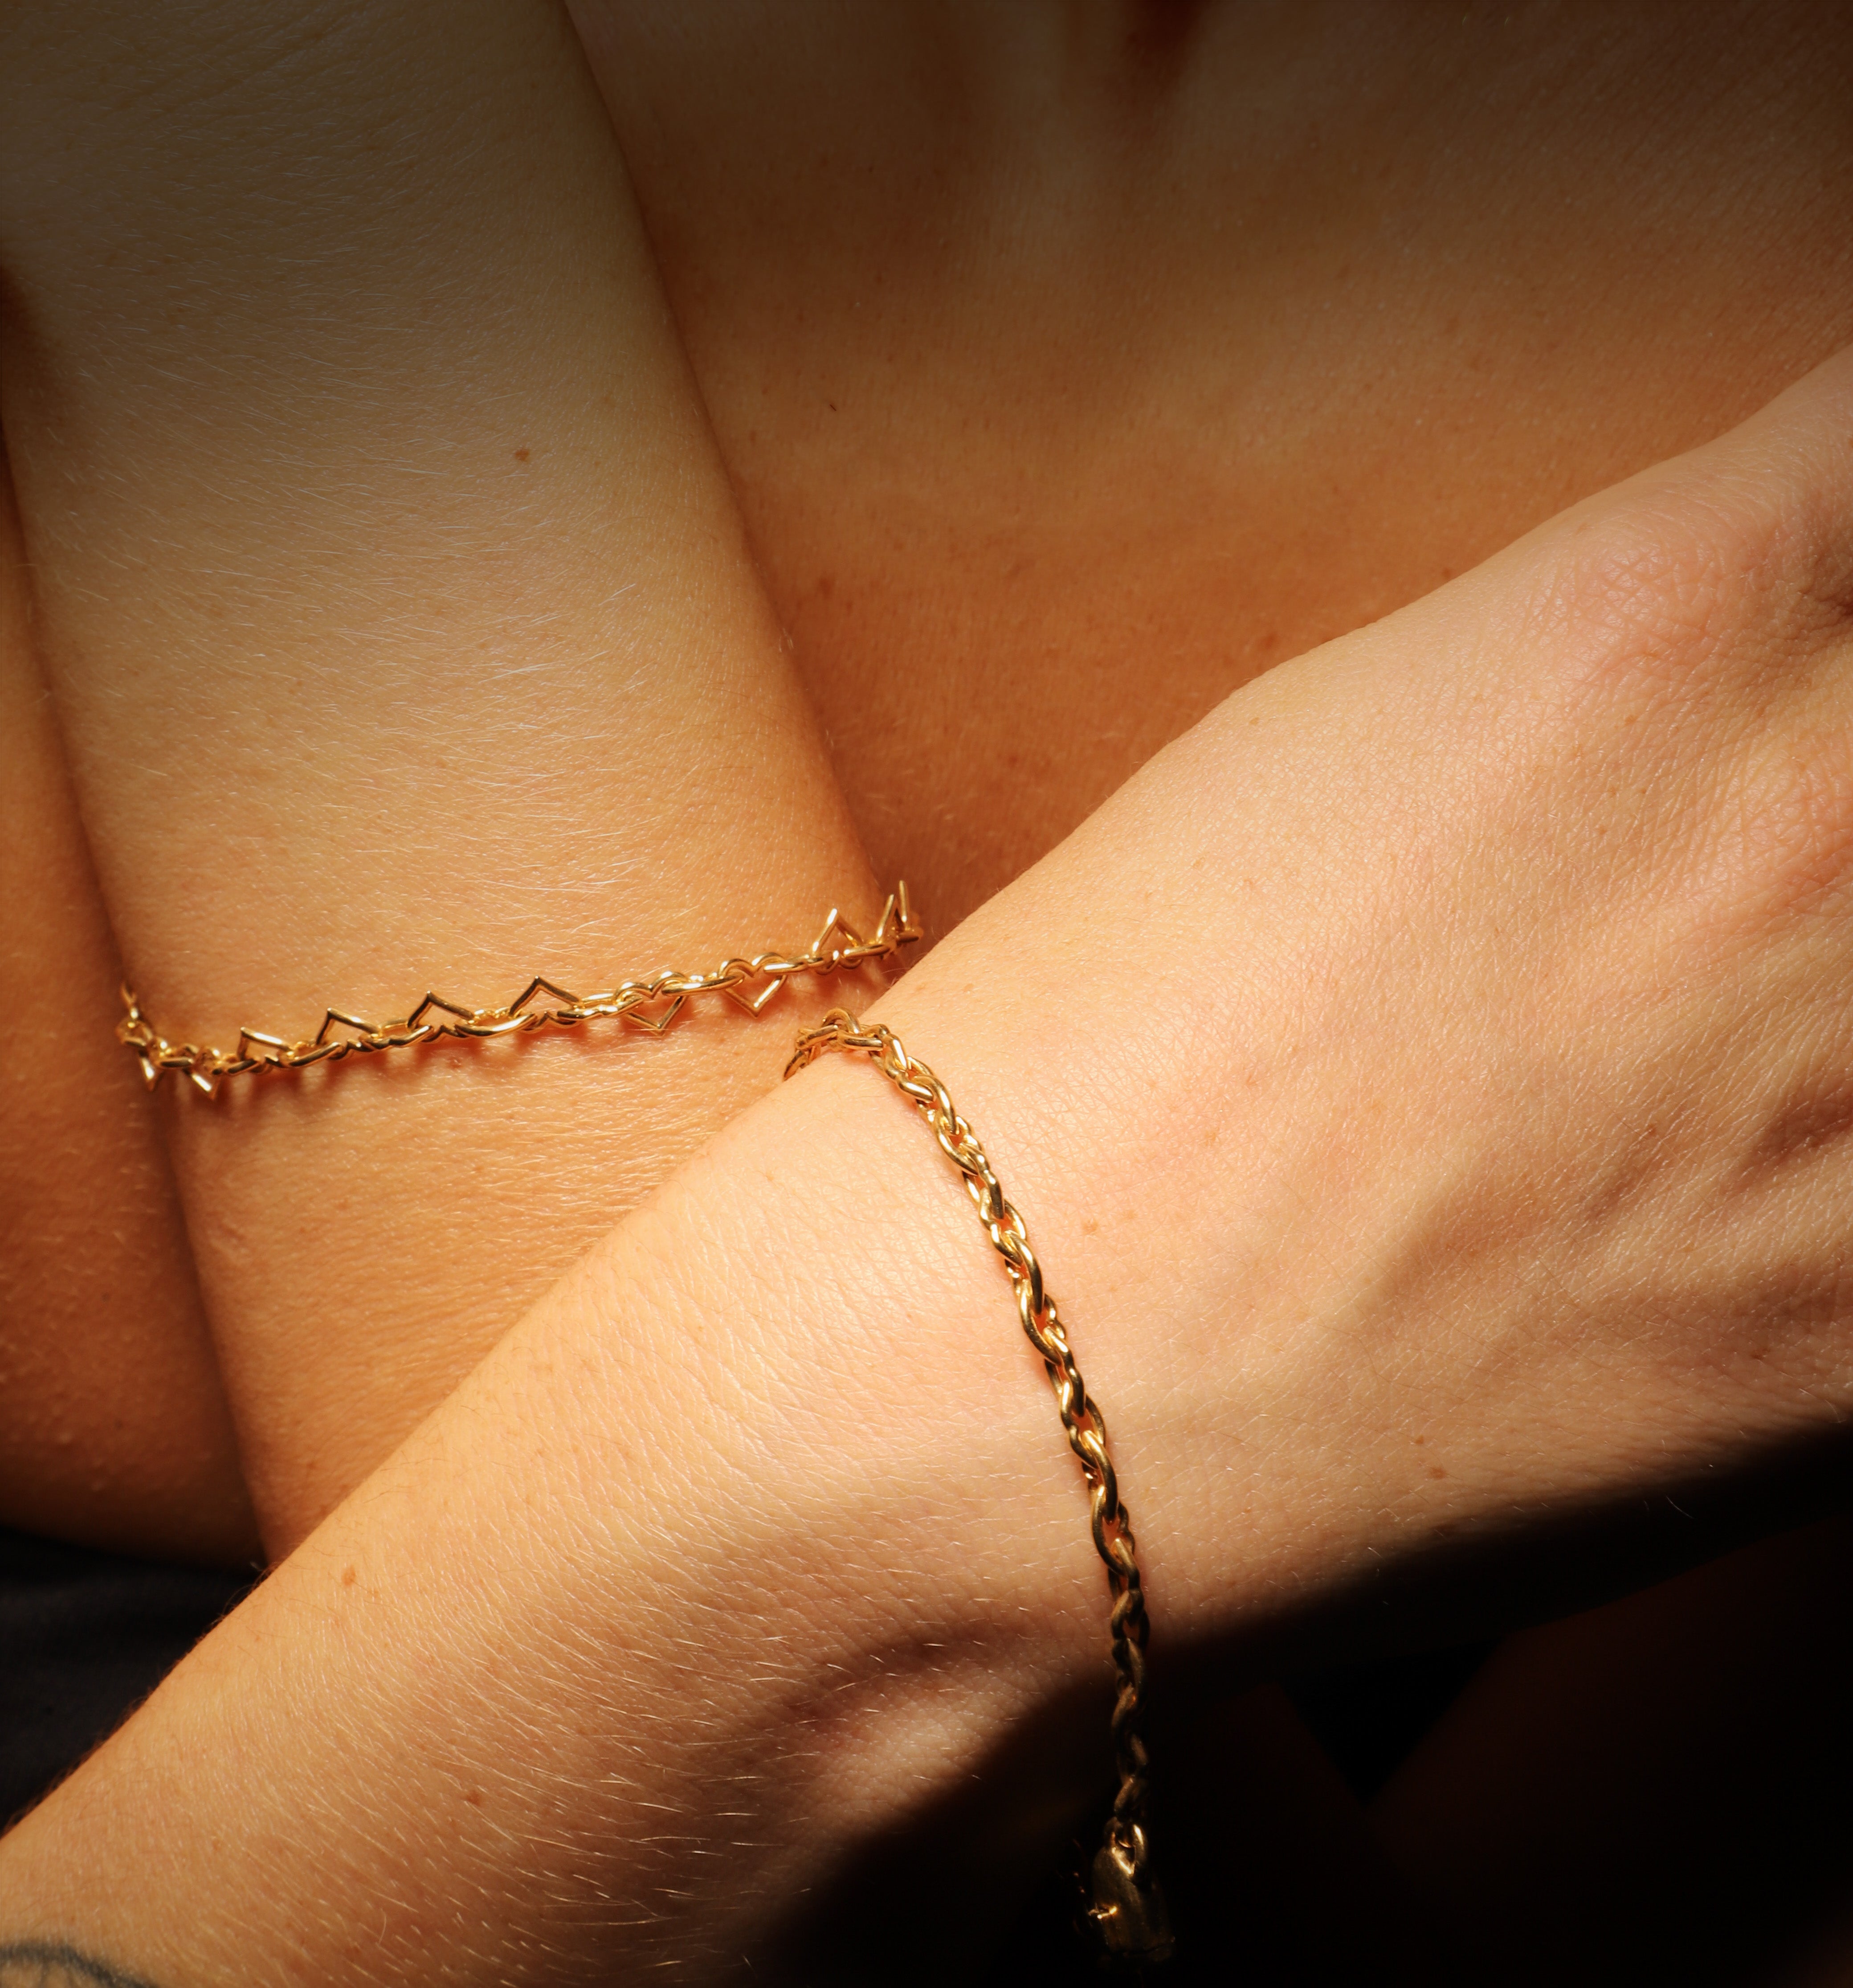 Love & Kisses Chain Bracelet by designer Solange Azagury Partridge - 18 carat Yellow Gold - model styling 1